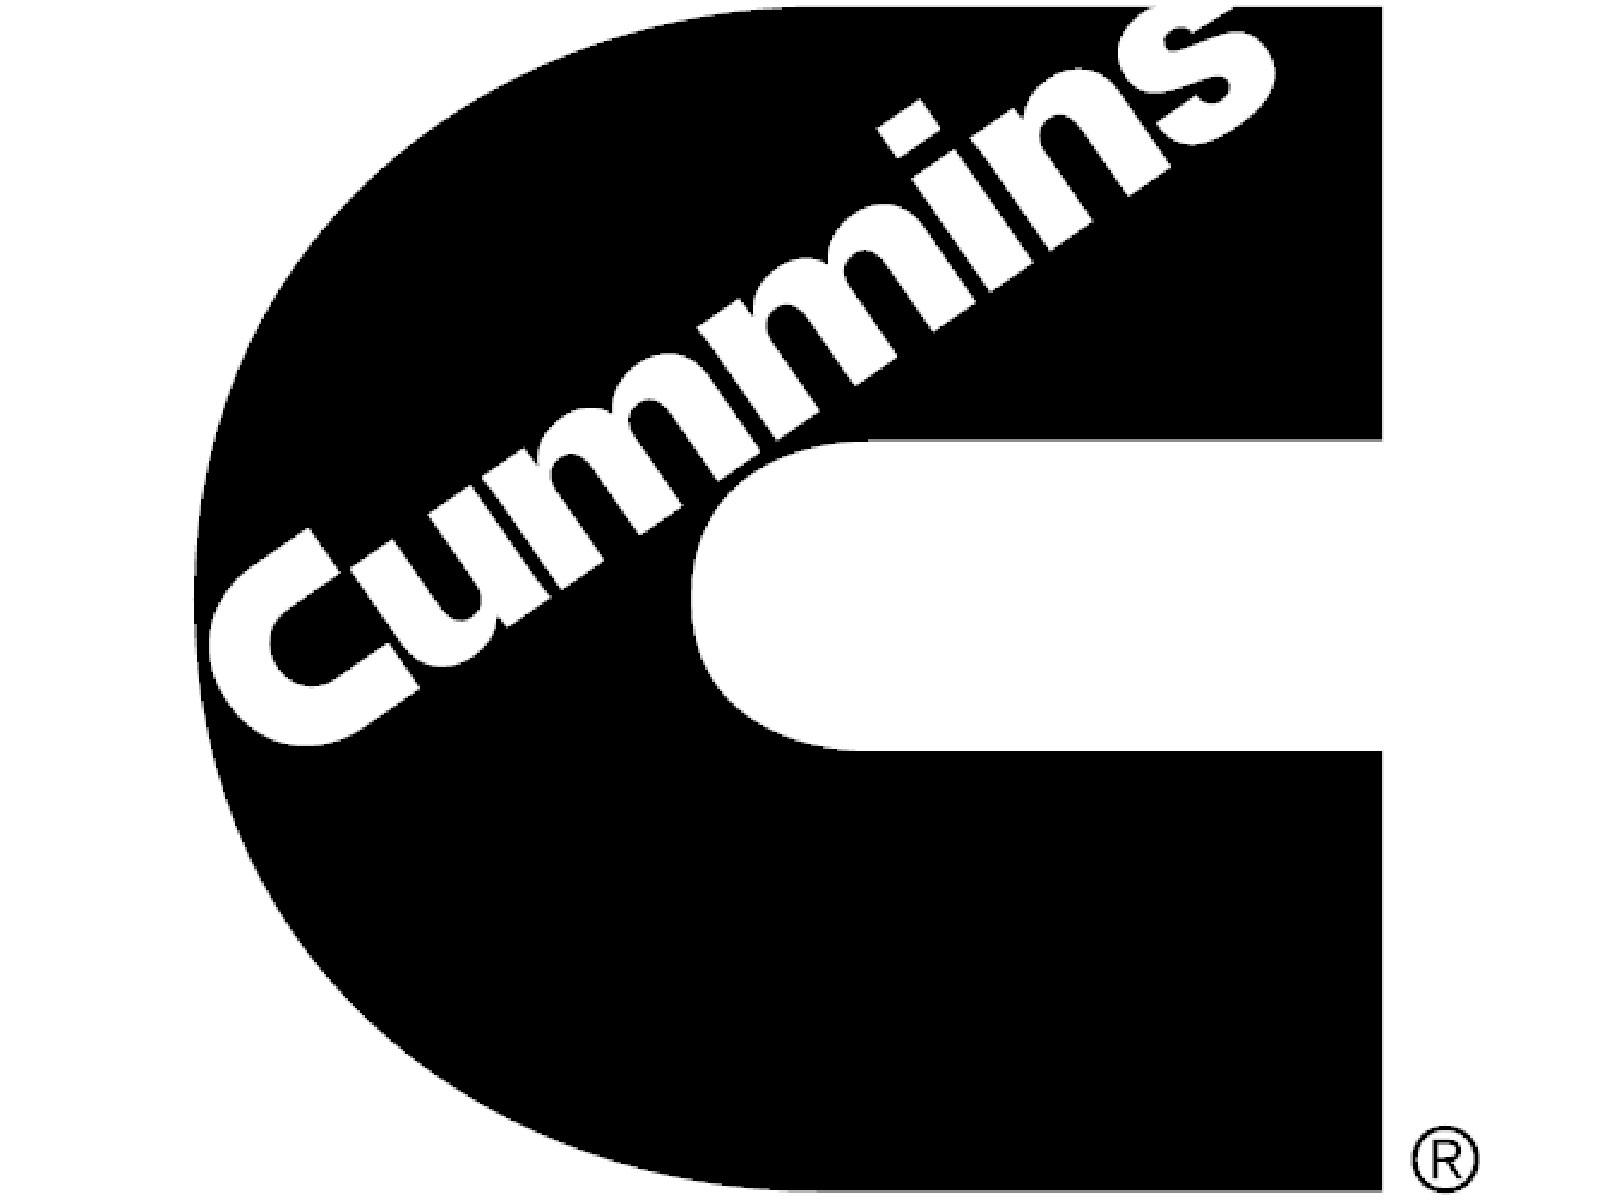 cummins logo wallpaper camo